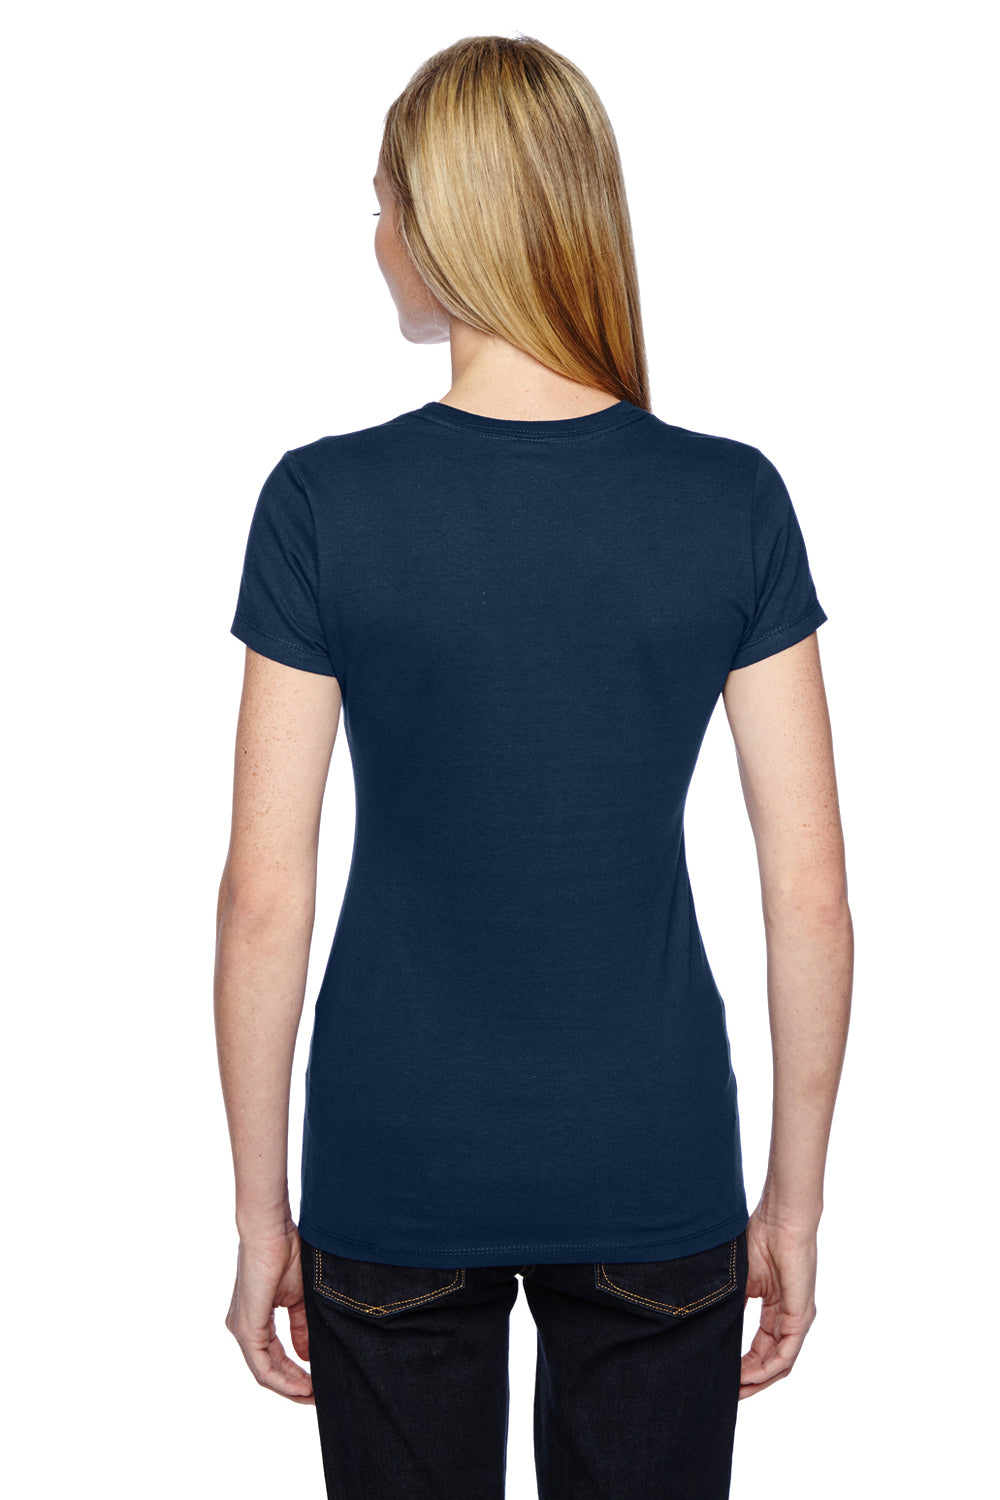 Fruit Of The Loom SSFJR Womens Sofspun Jersey Short Sleeve Crewneck T-Shirt Navy Blue Back